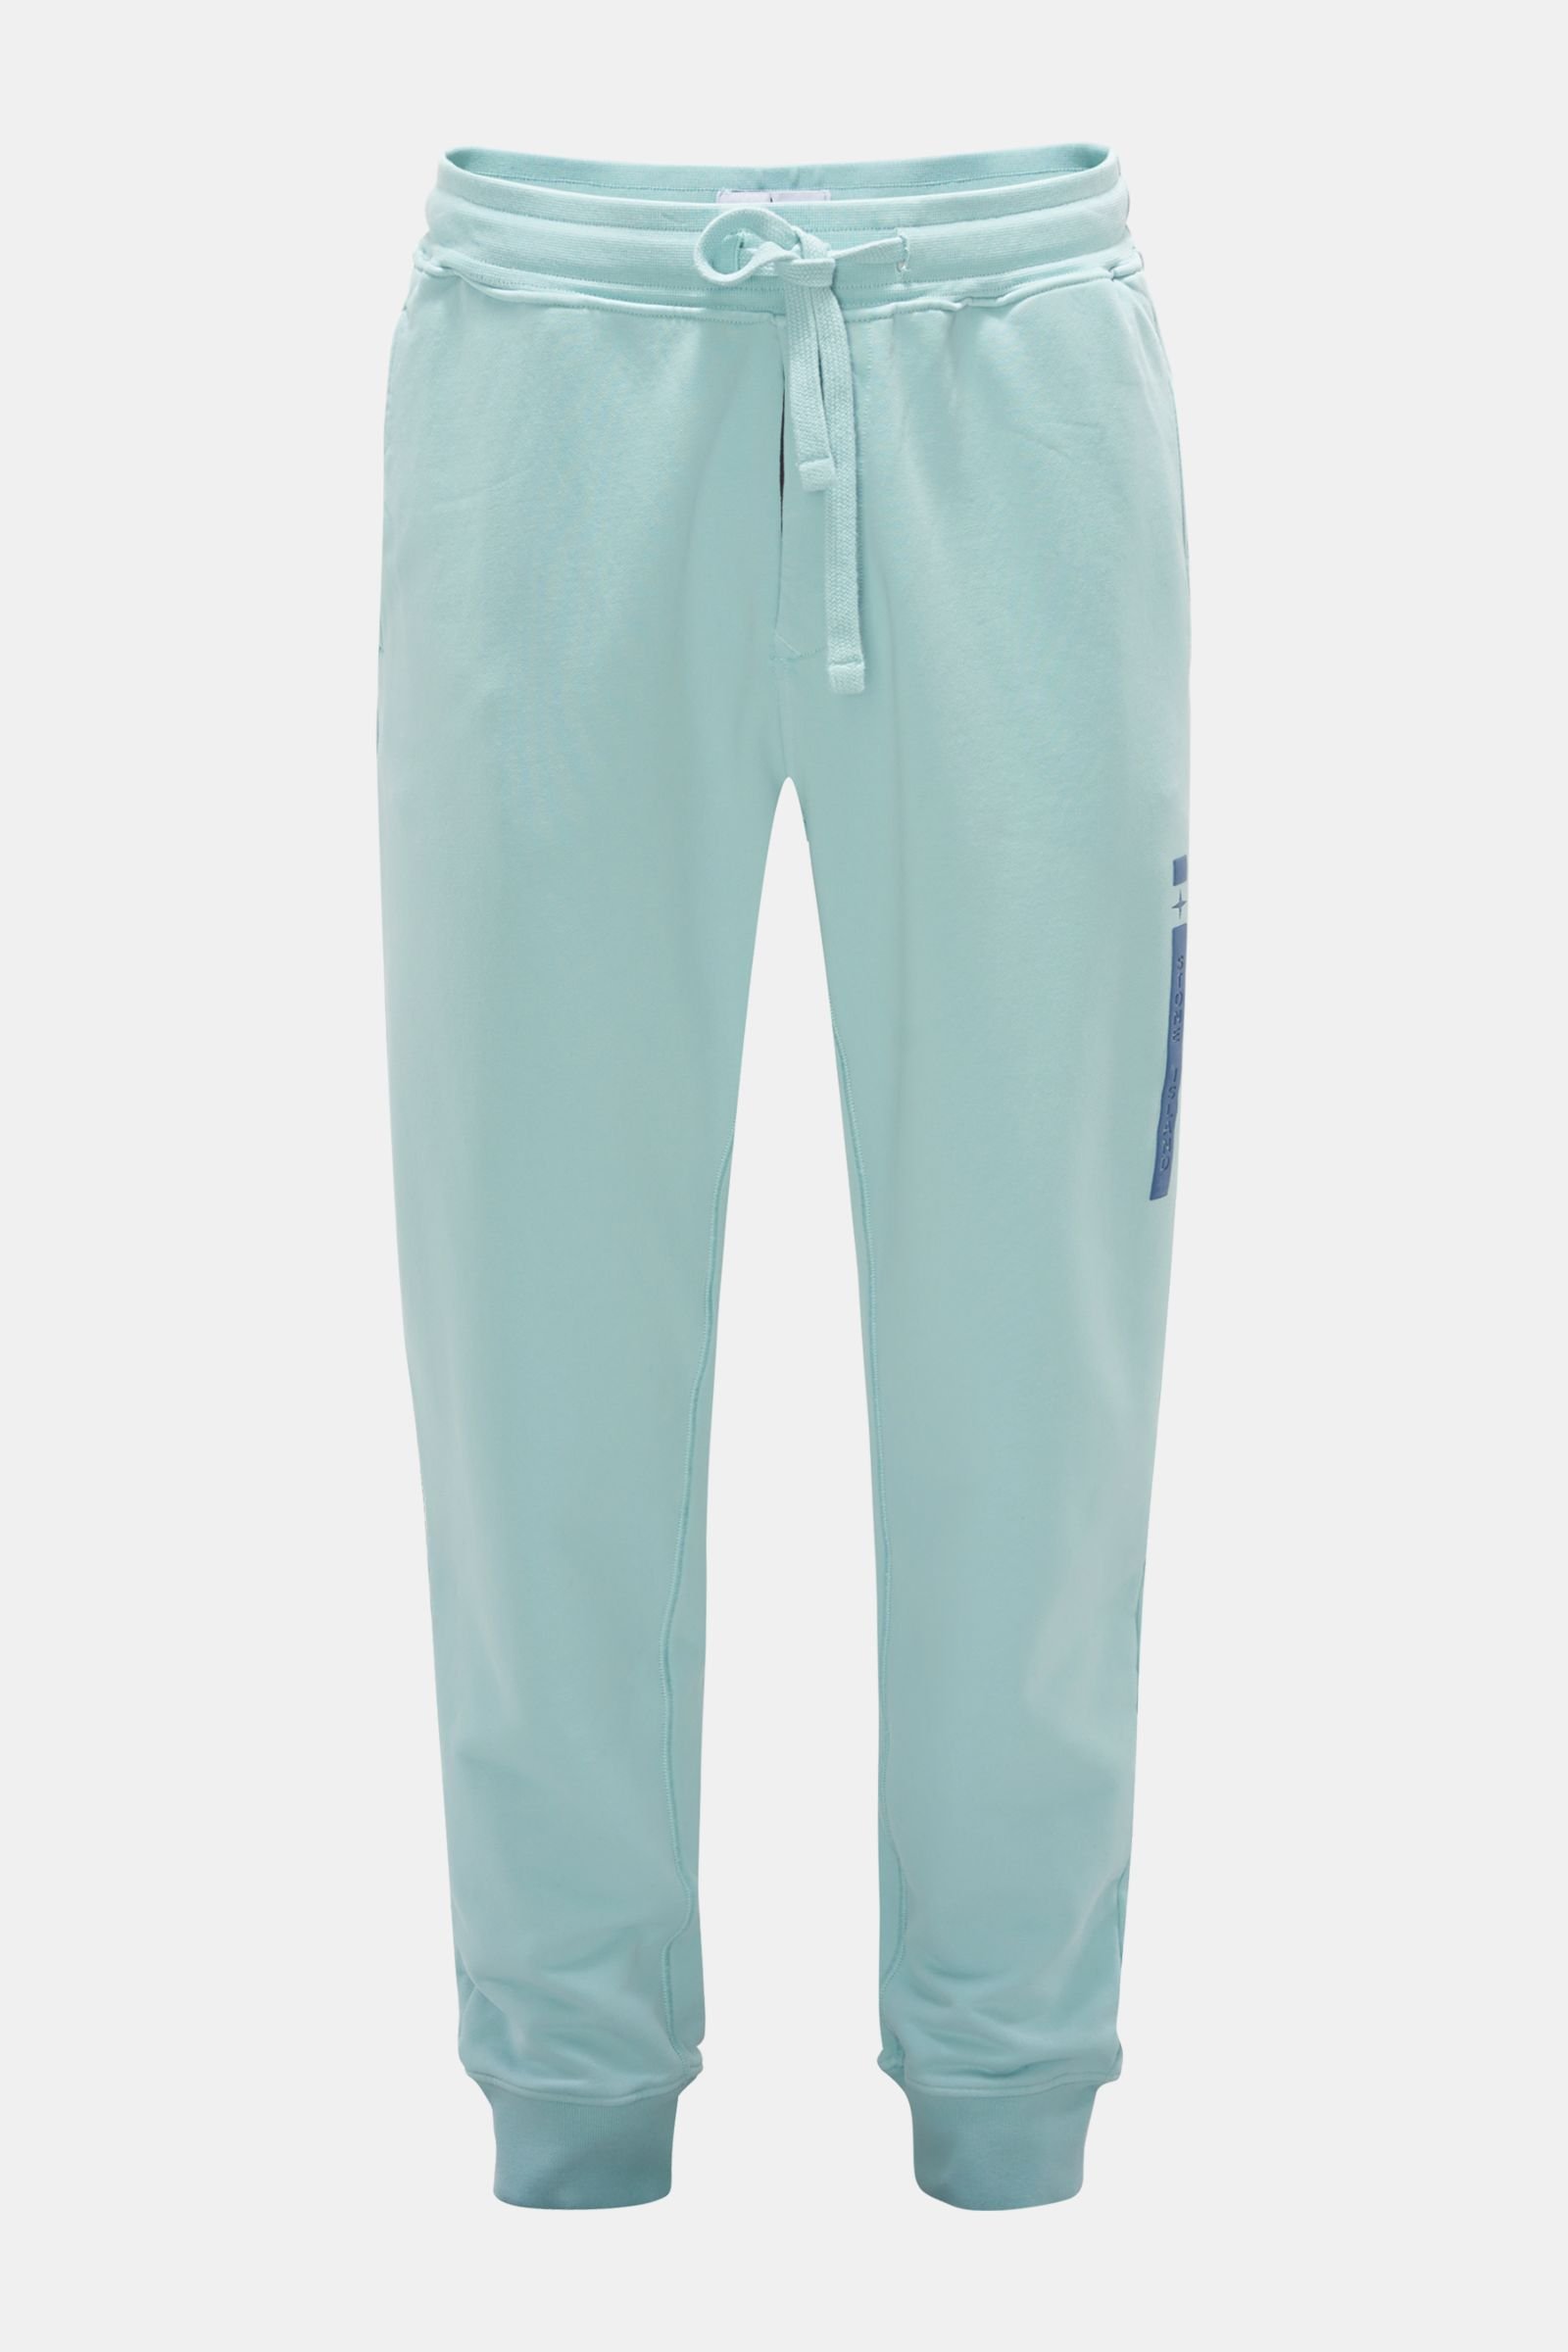 Sweat pants turquoise